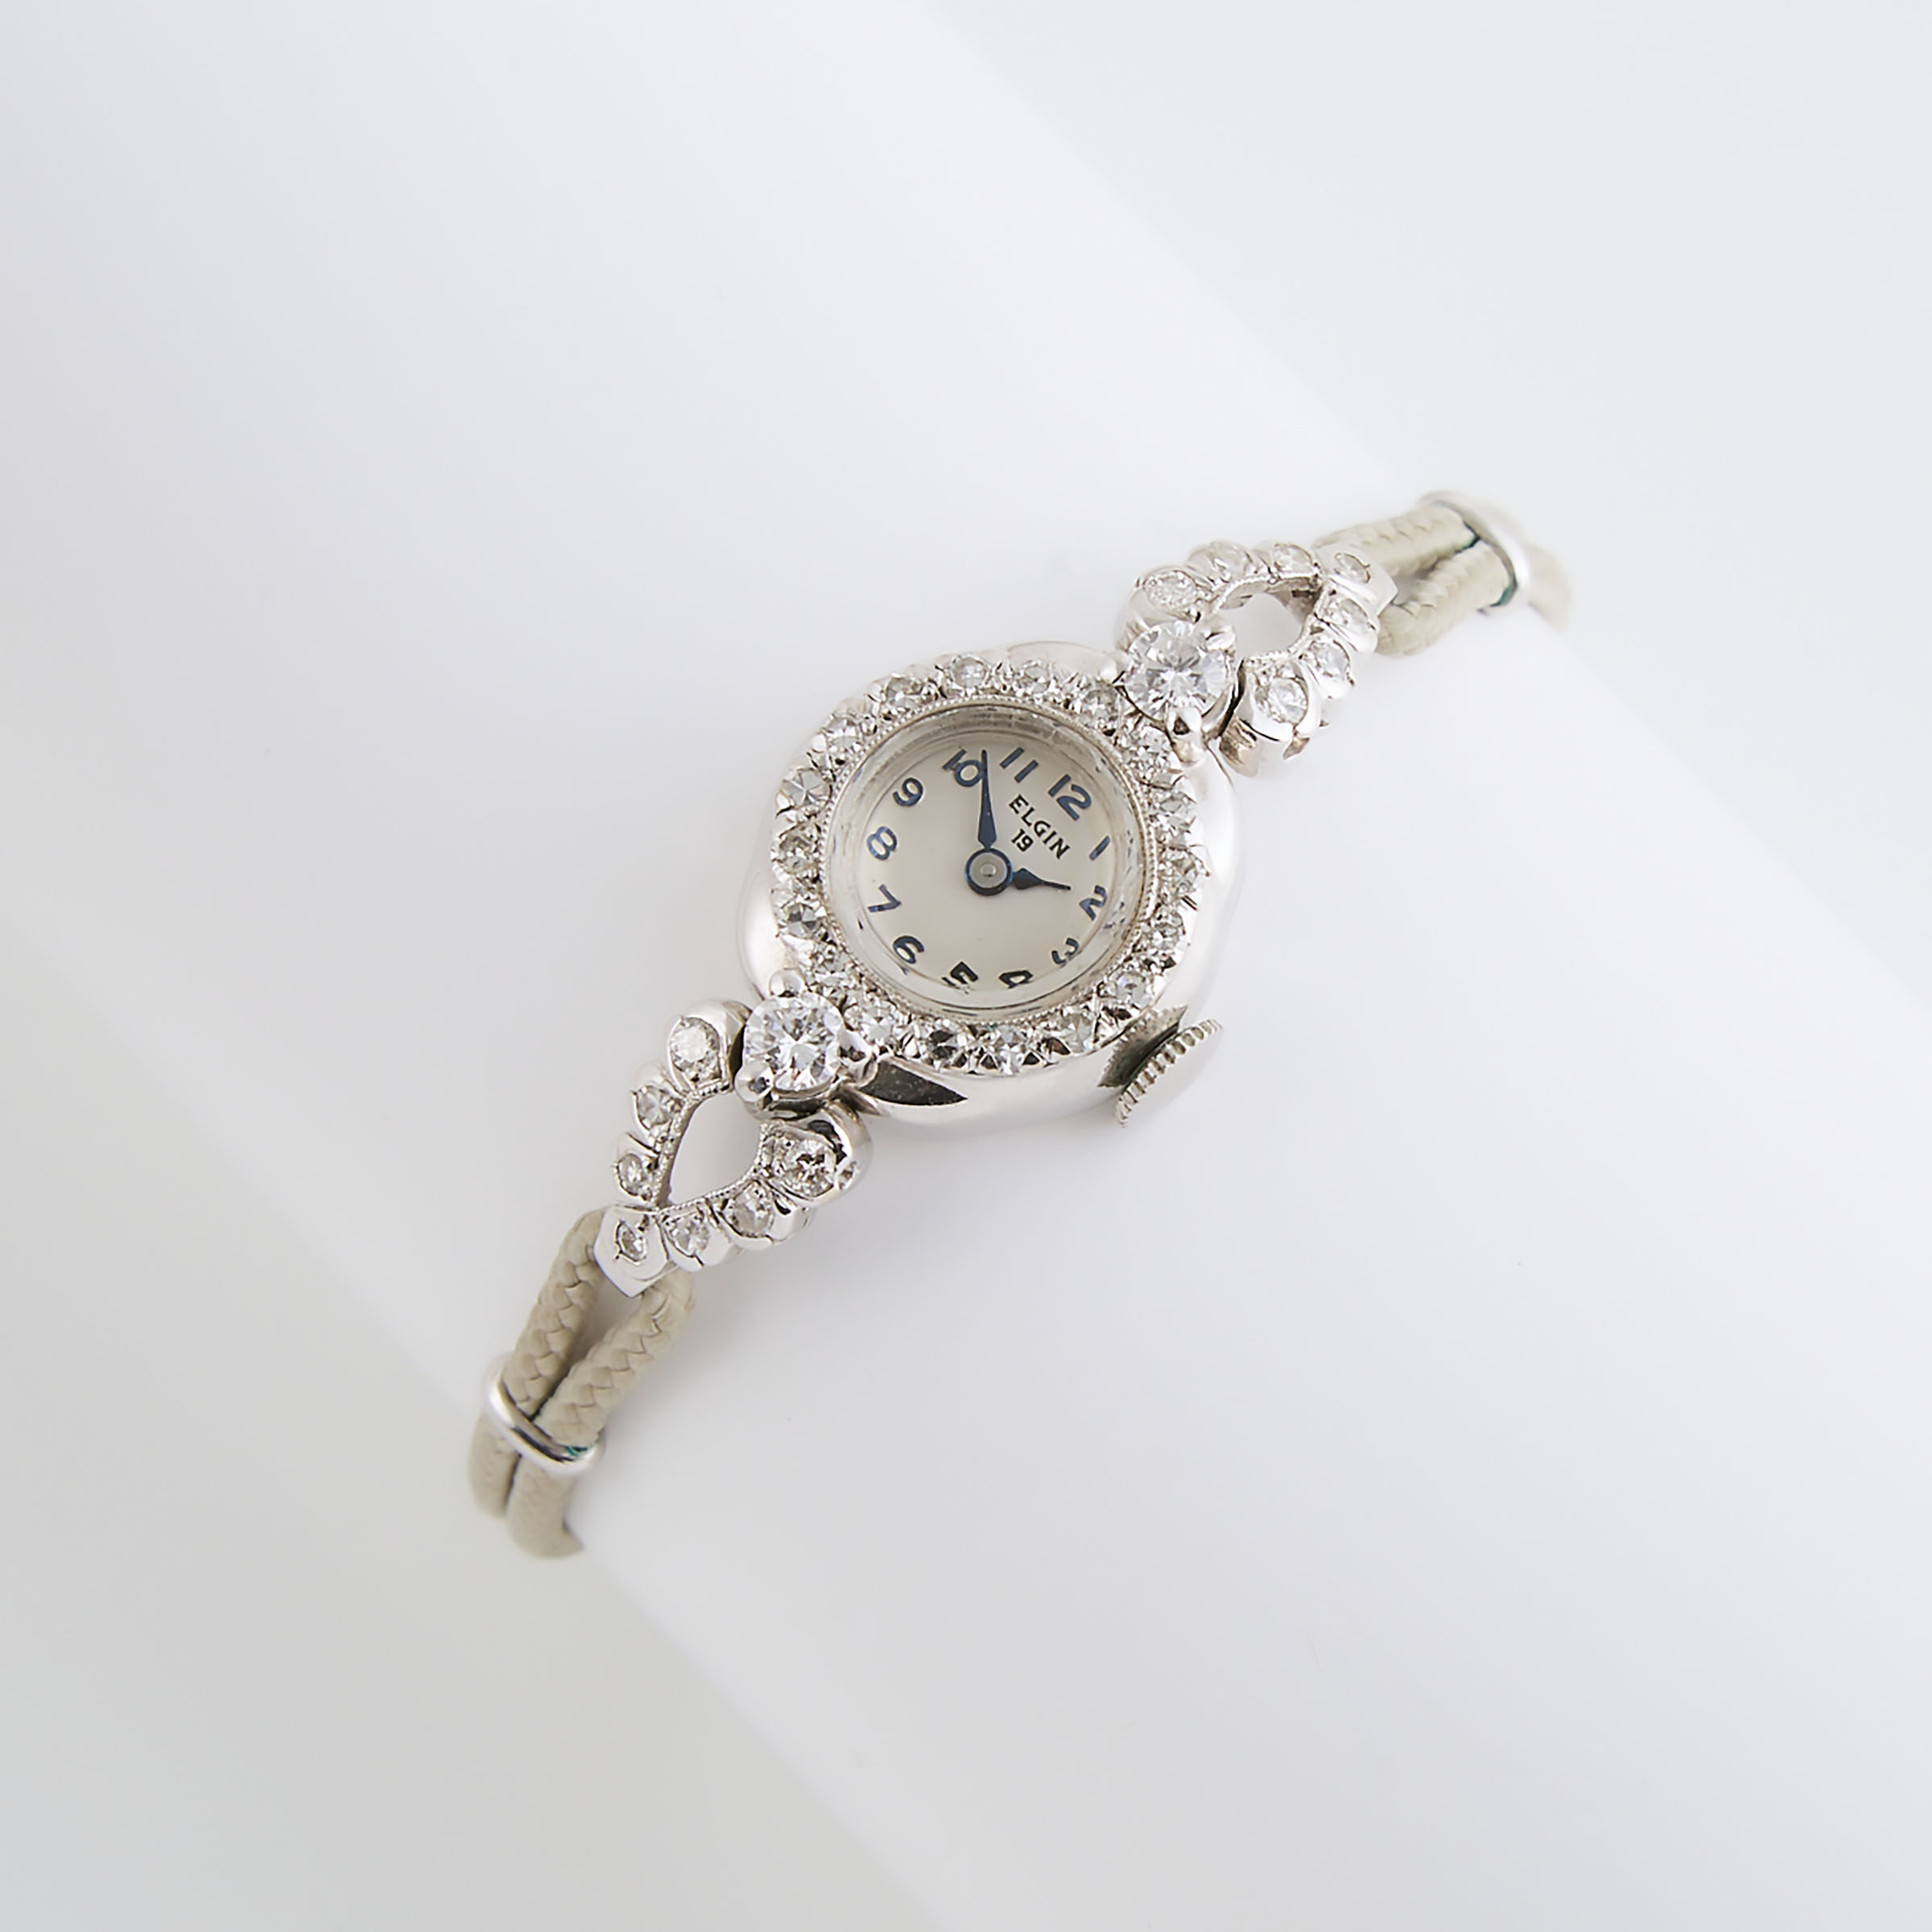 Lady's Elgin Wristwatch